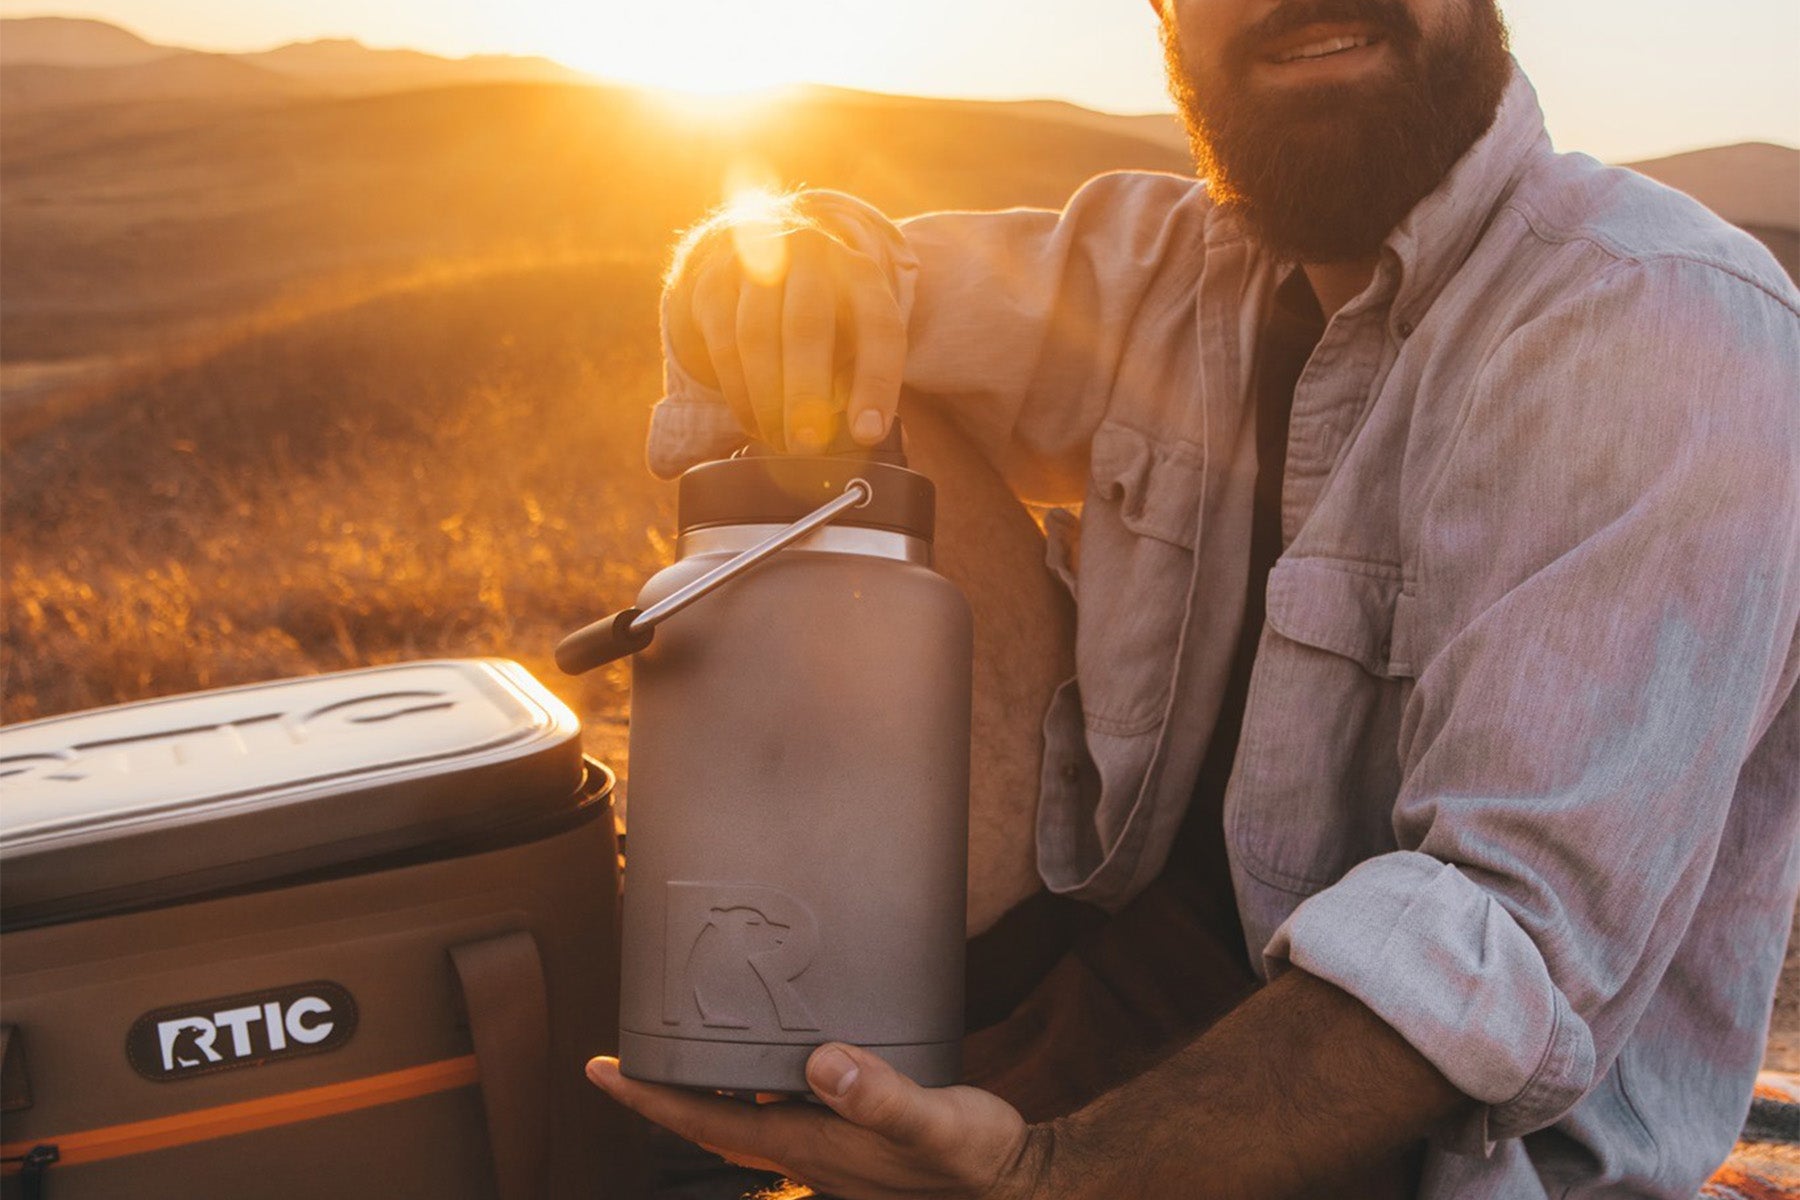 Man holding gray RTIC Half Gallon water jug next to tan RTIC cooler outside